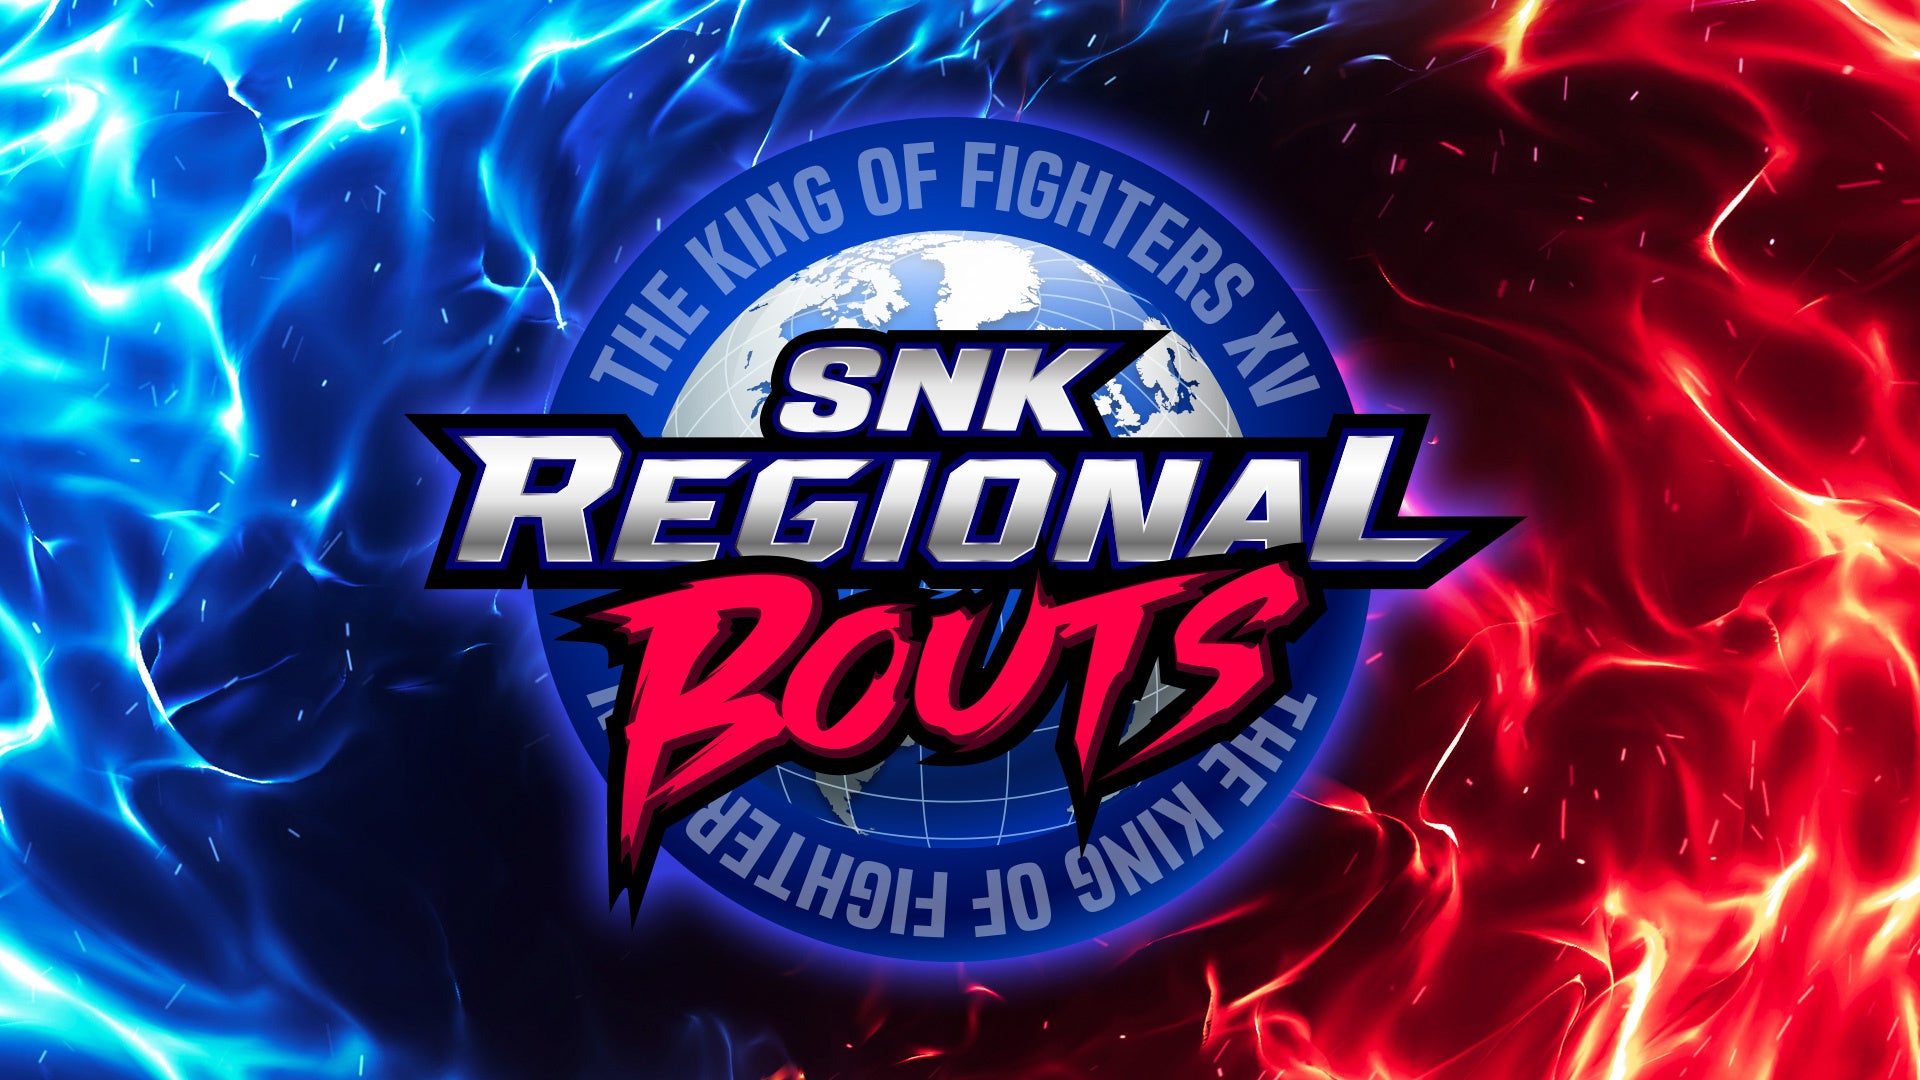 『KOF XV』の公式大会「SNK REGIONAL BOUTS」を開催！世界7地域を対象にオンライン大会を実施し、地域チャンピオンを決定。本日より、エントリーを開始。